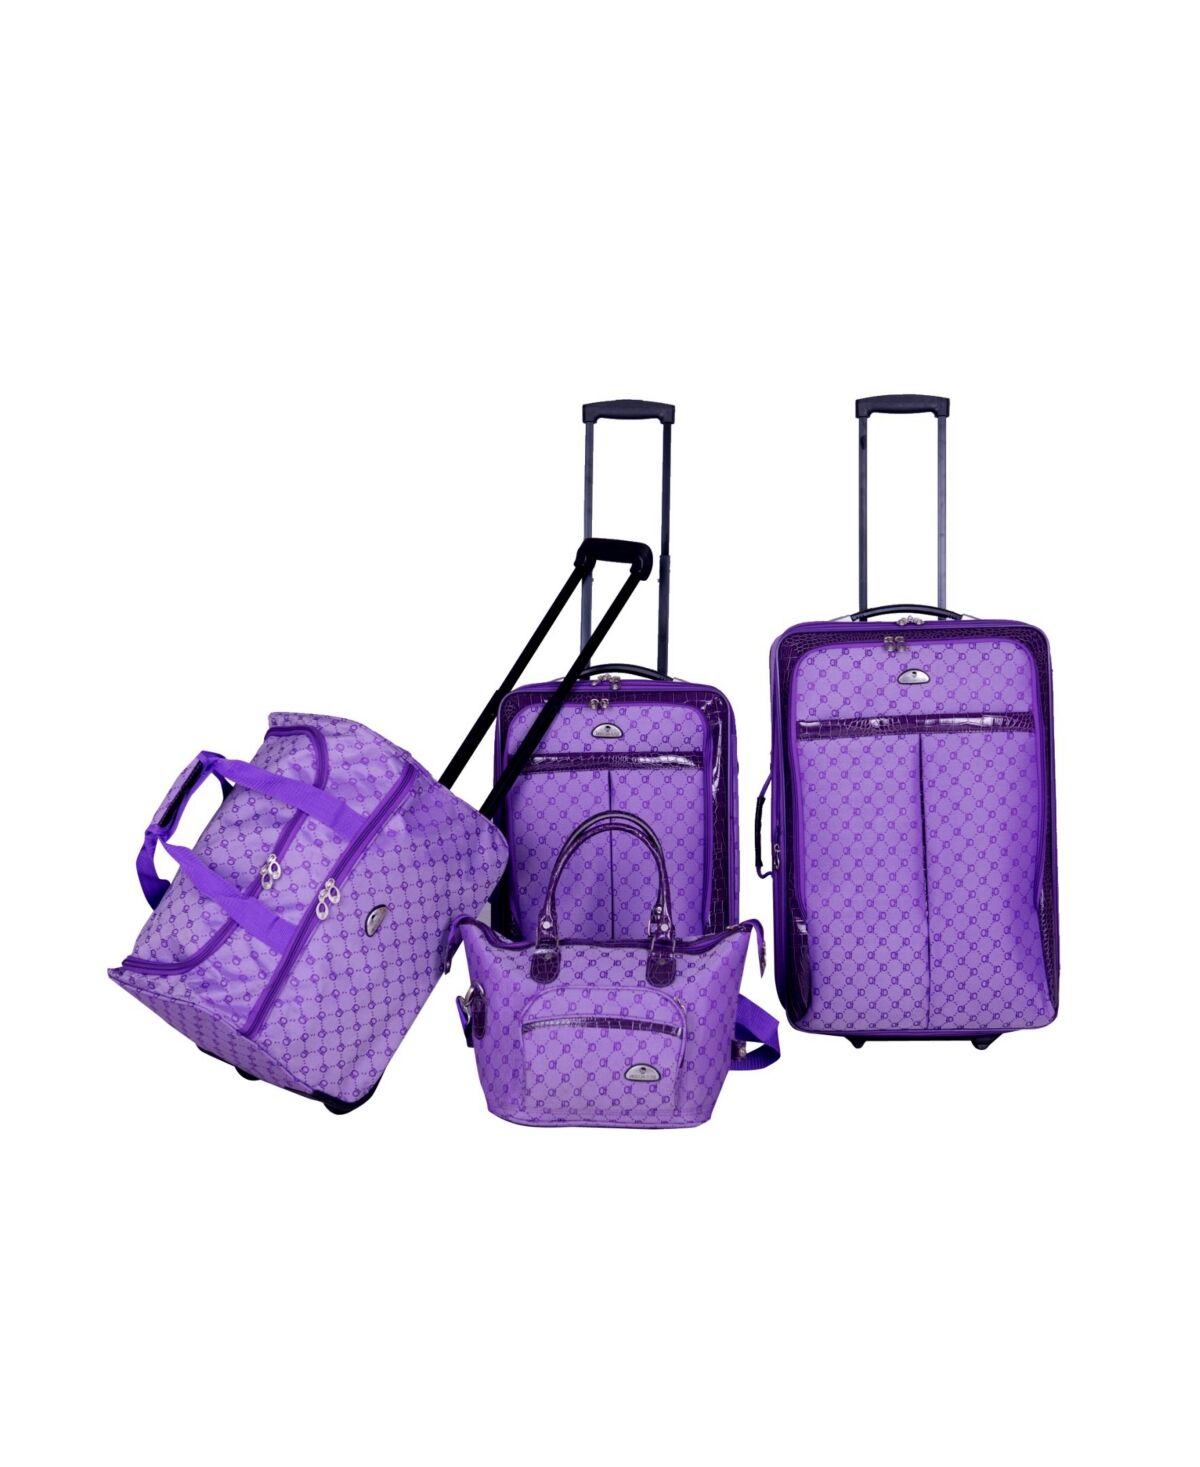 American Flyer Signature 4 Piece Luggage Set - Lavender